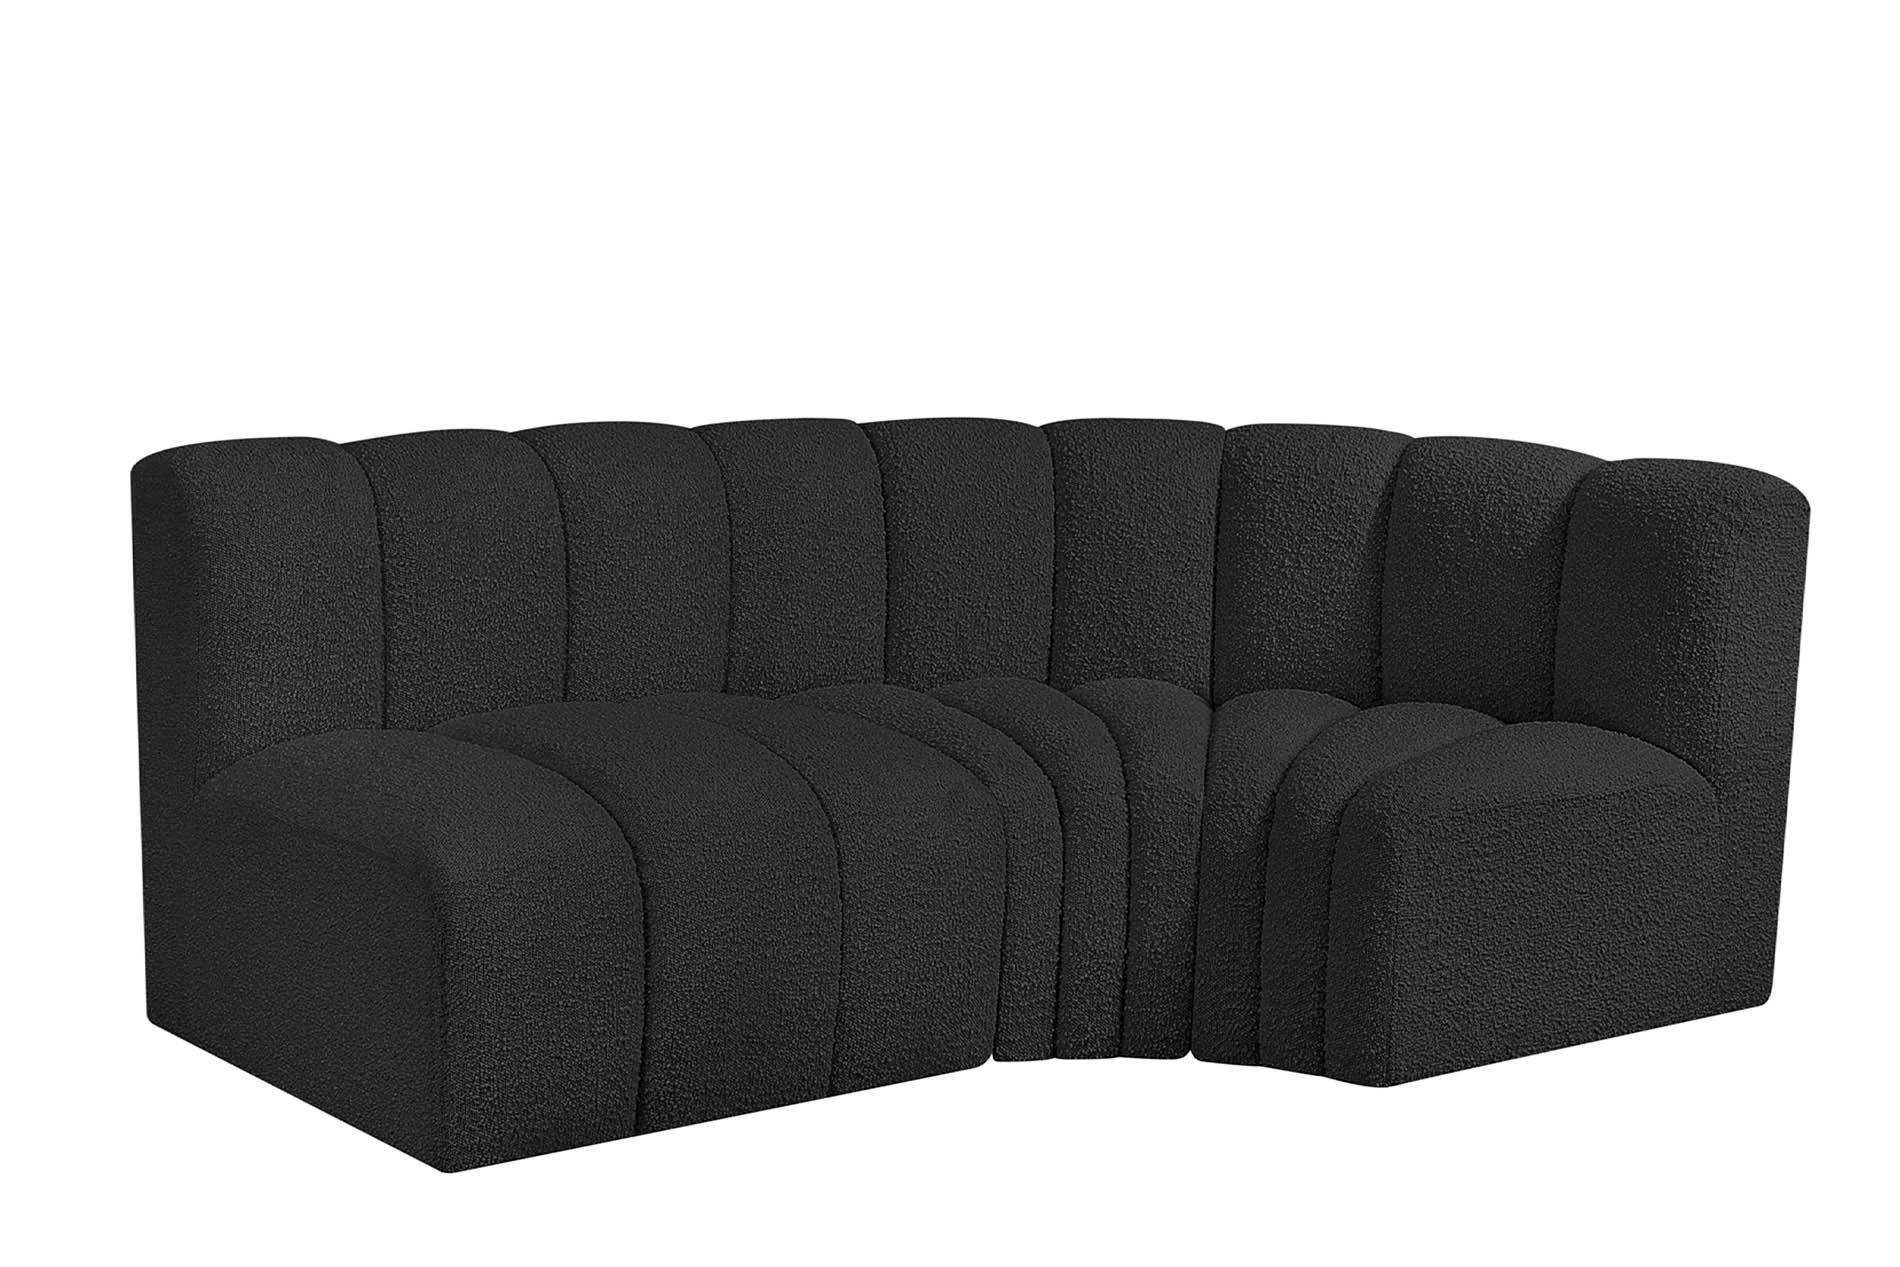 Contemporary, Modern Modular Sectional Sofa ARC 102Black-S3A 102Black-S3A in Black 